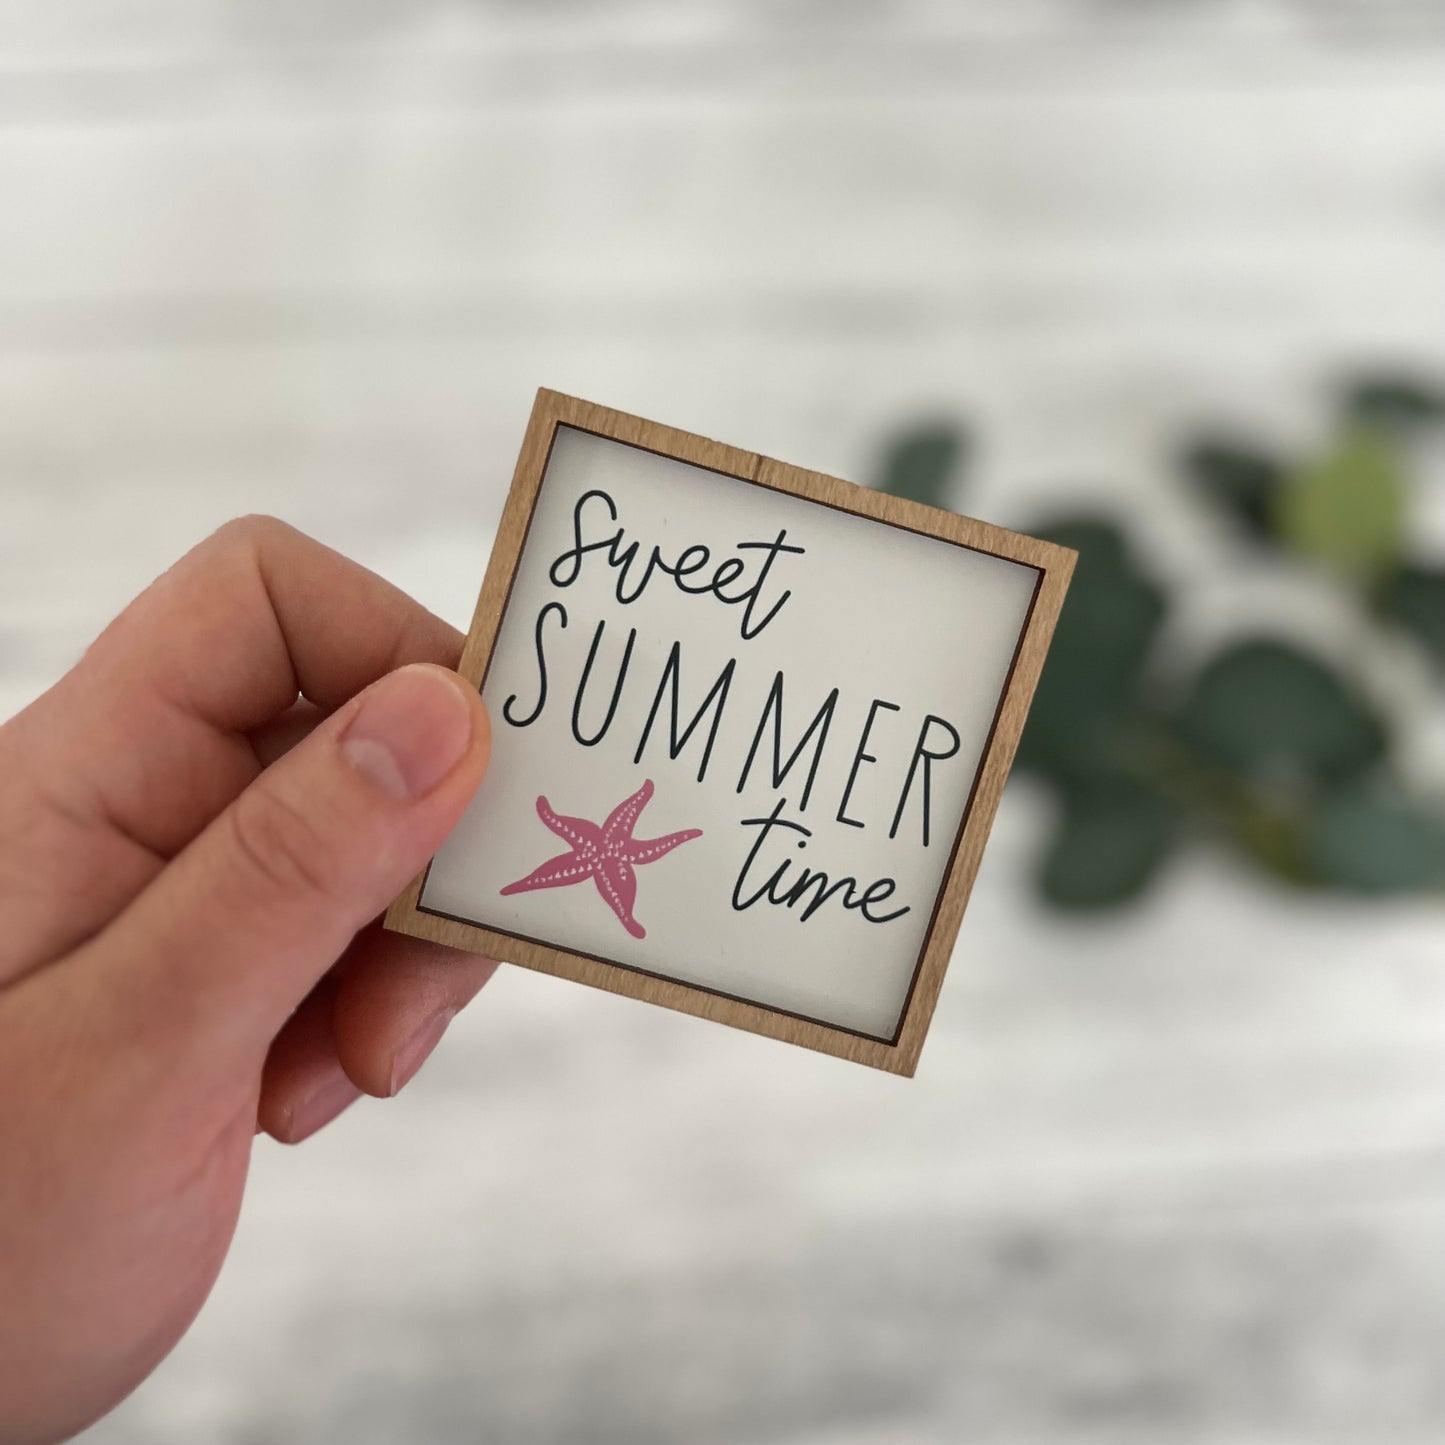 Mini Framed Summer Themed Sign | Sweet Summer Time-Starfish